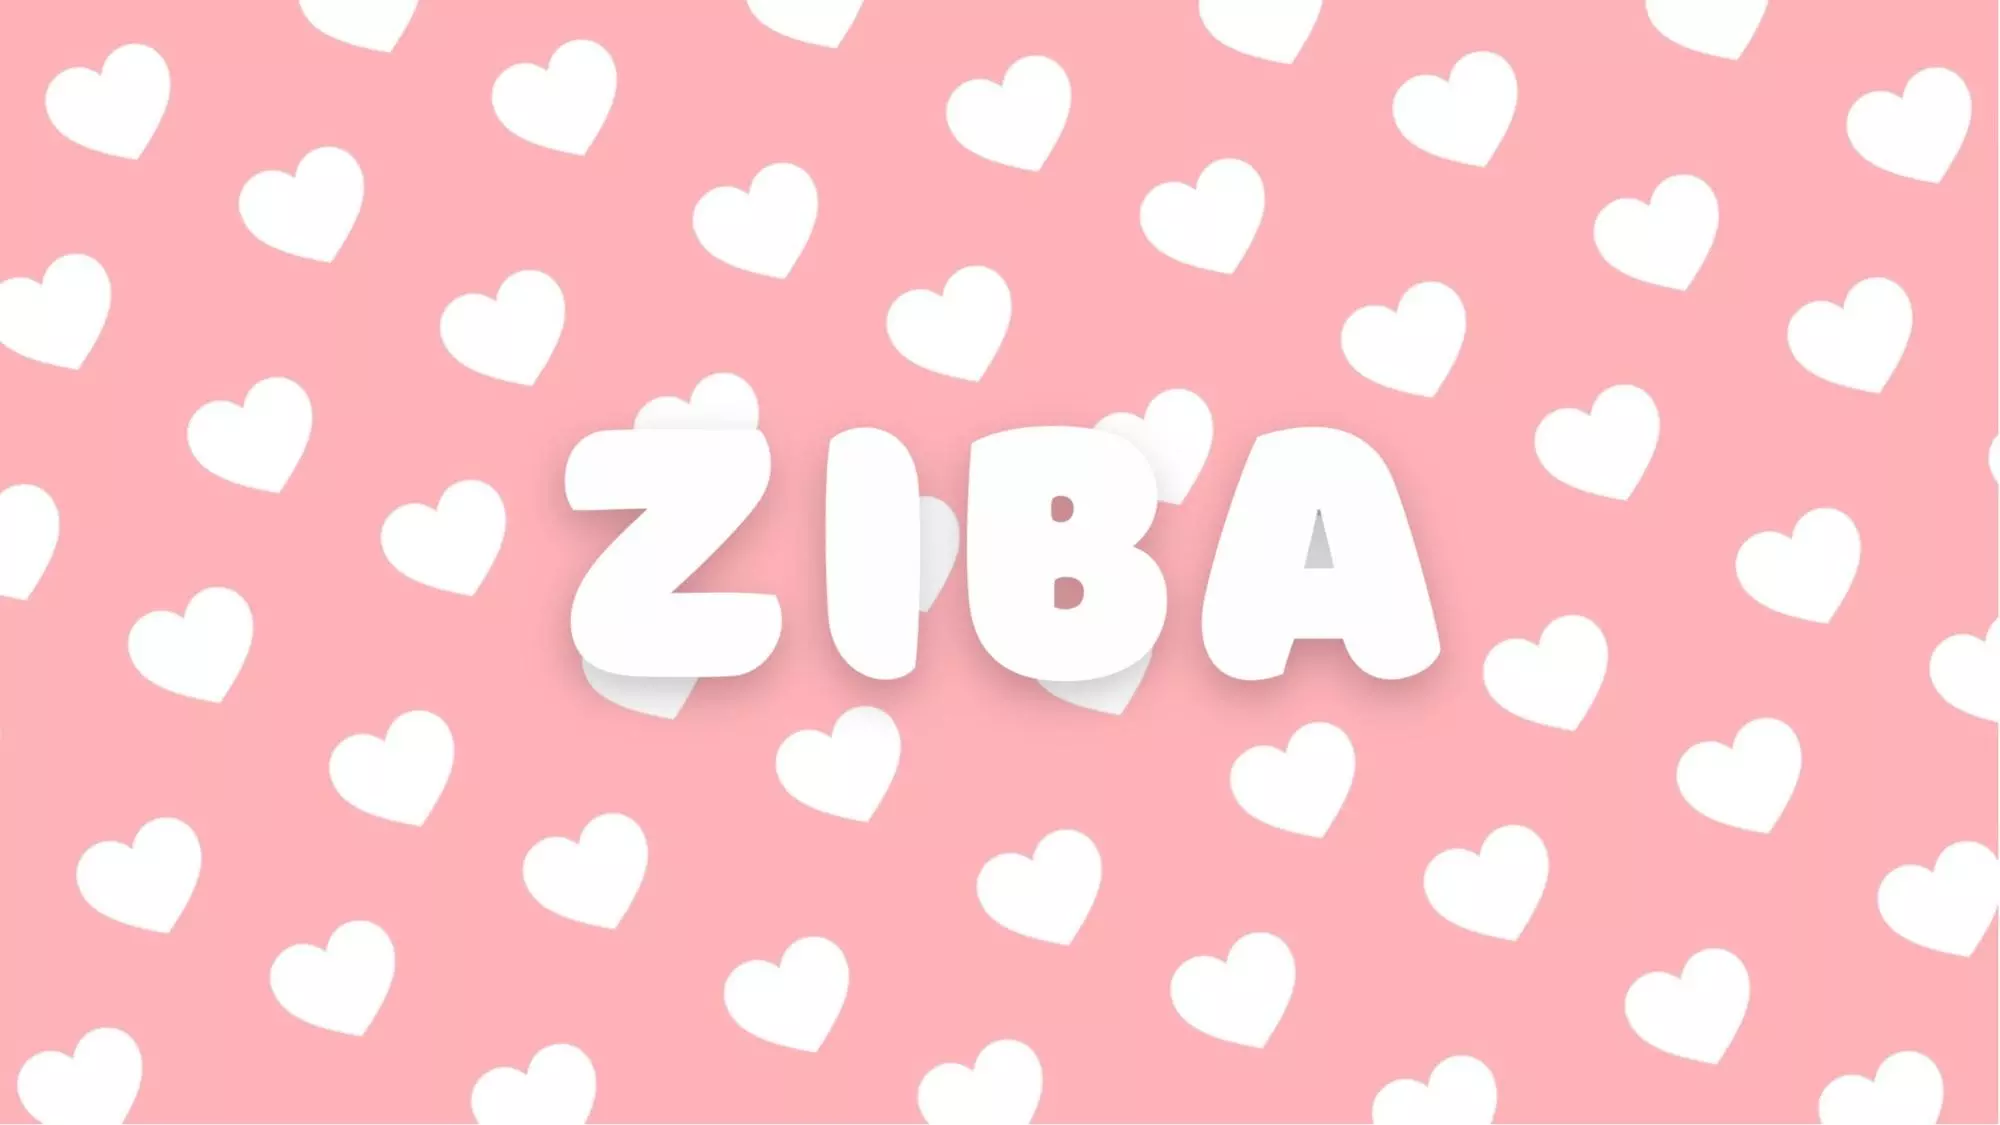 zibablum profile